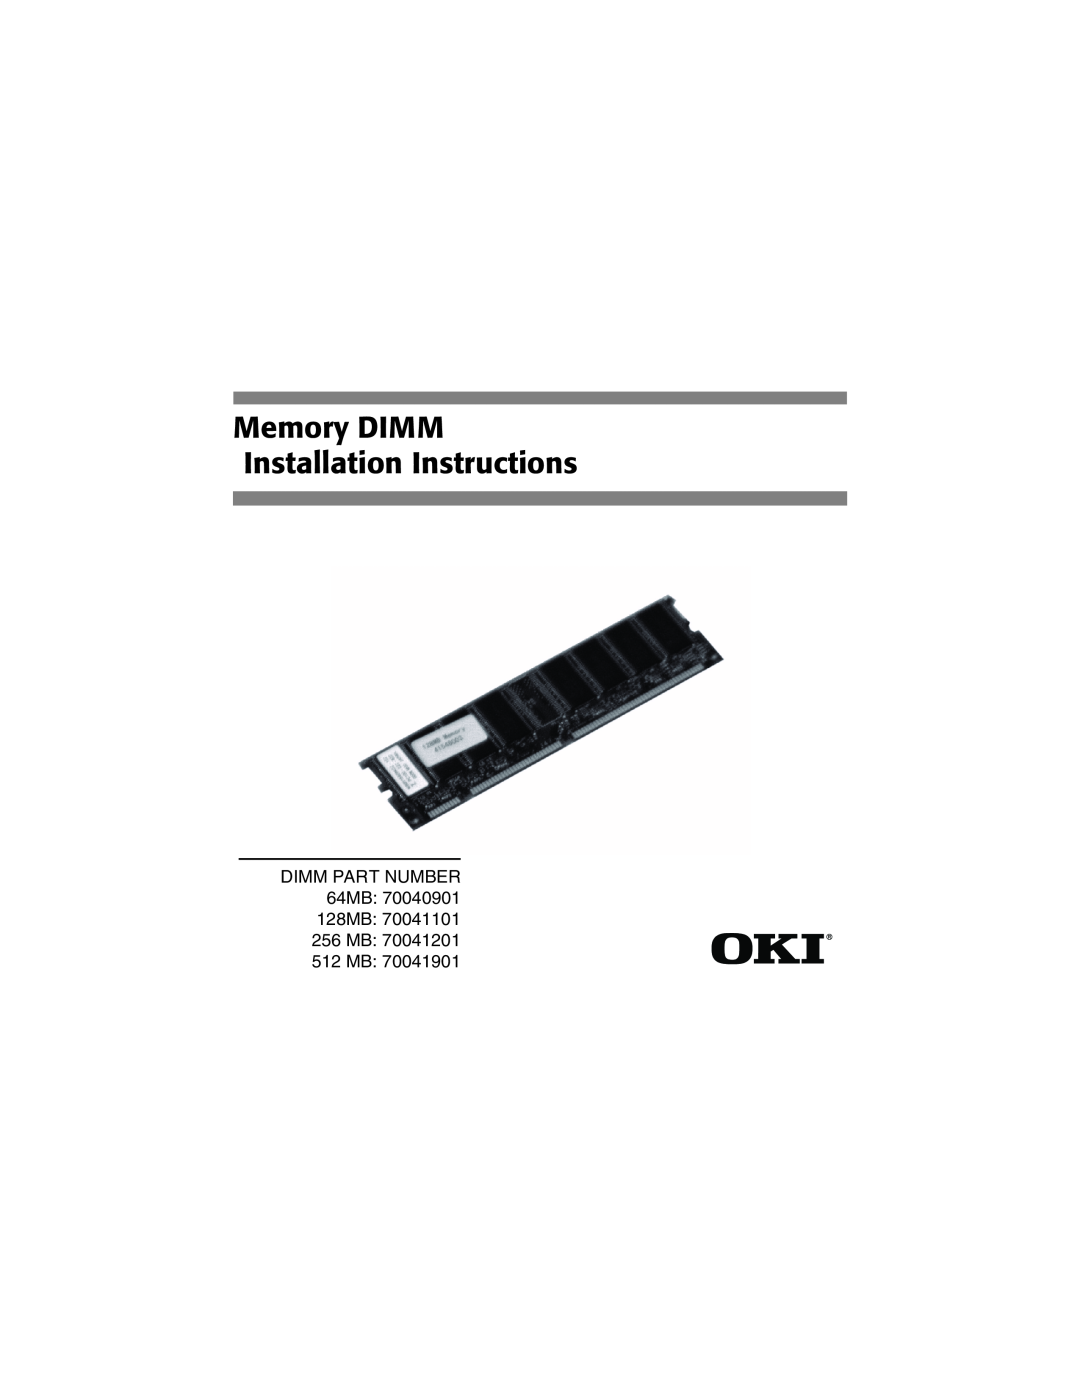 Oki 70040901 installation instructions Memory DIMM Installation Instructions 